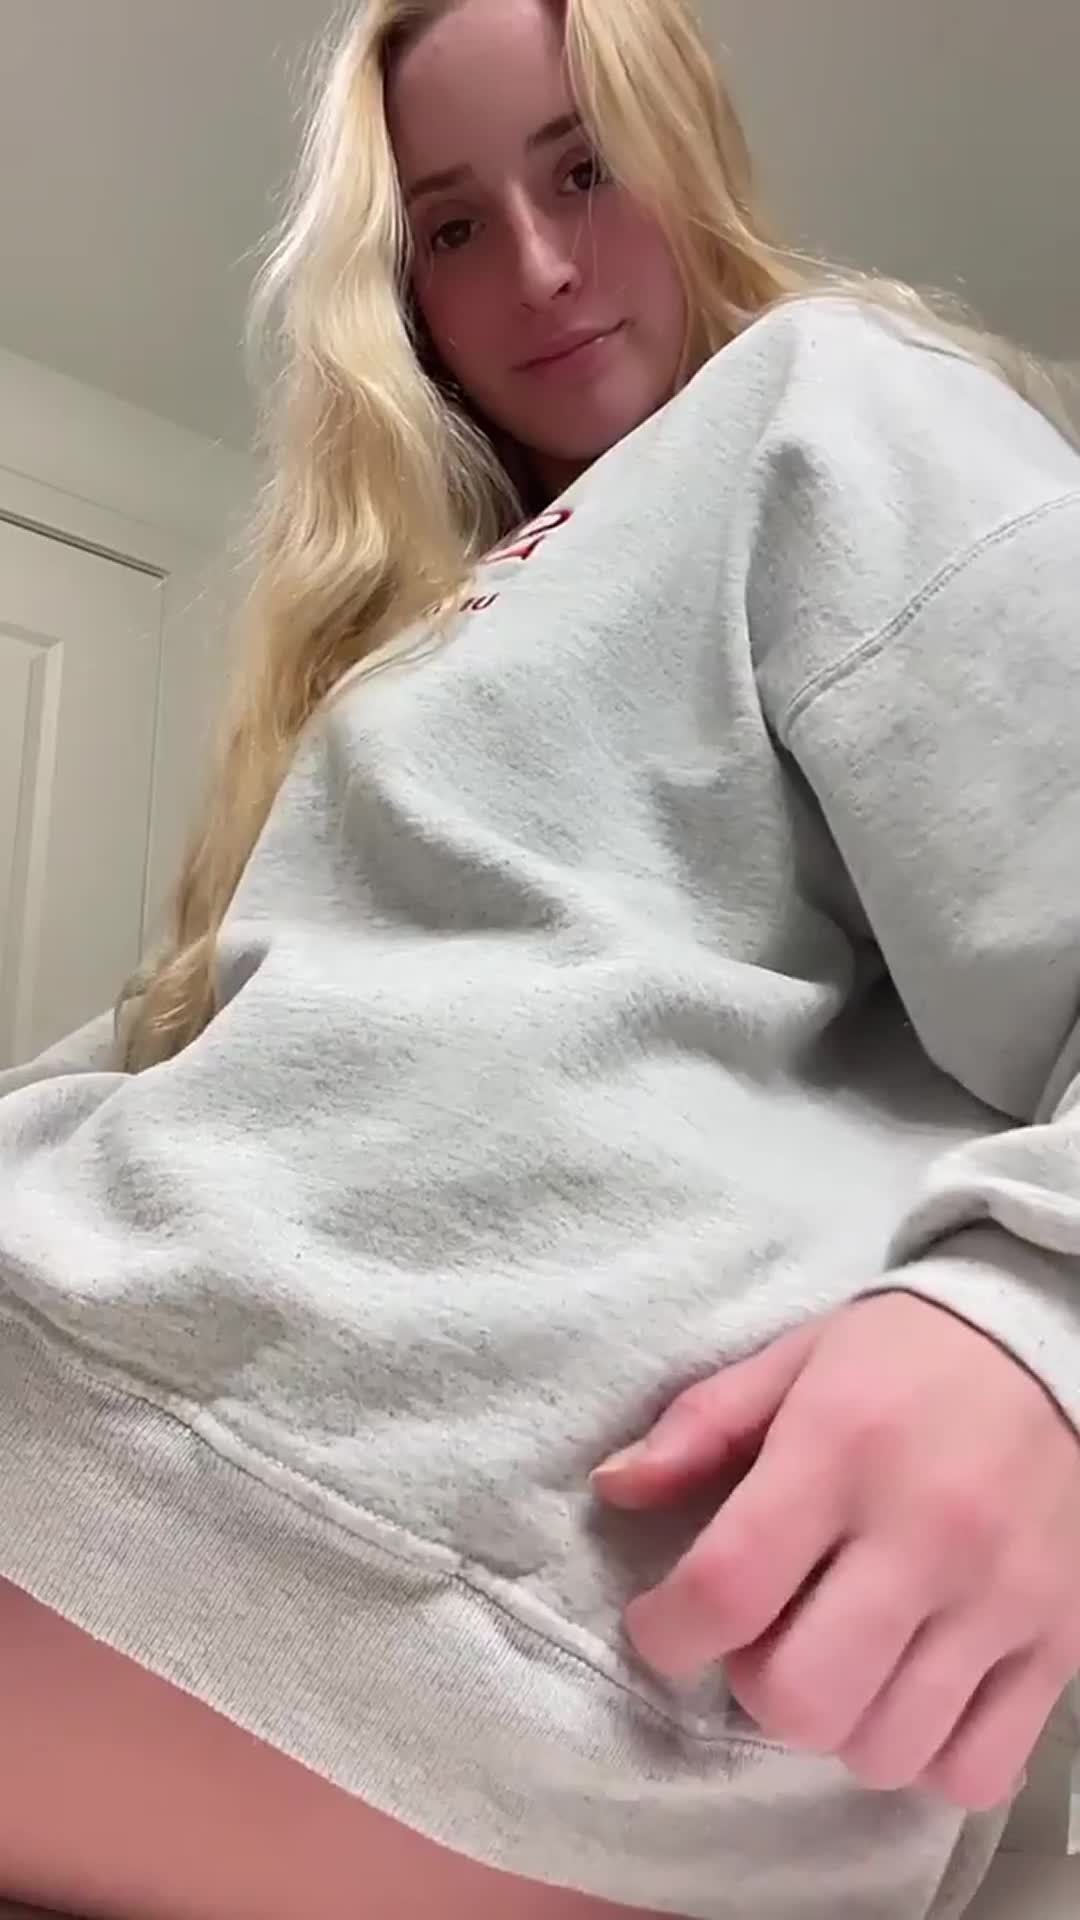 Video post by Mommy.Lauren6